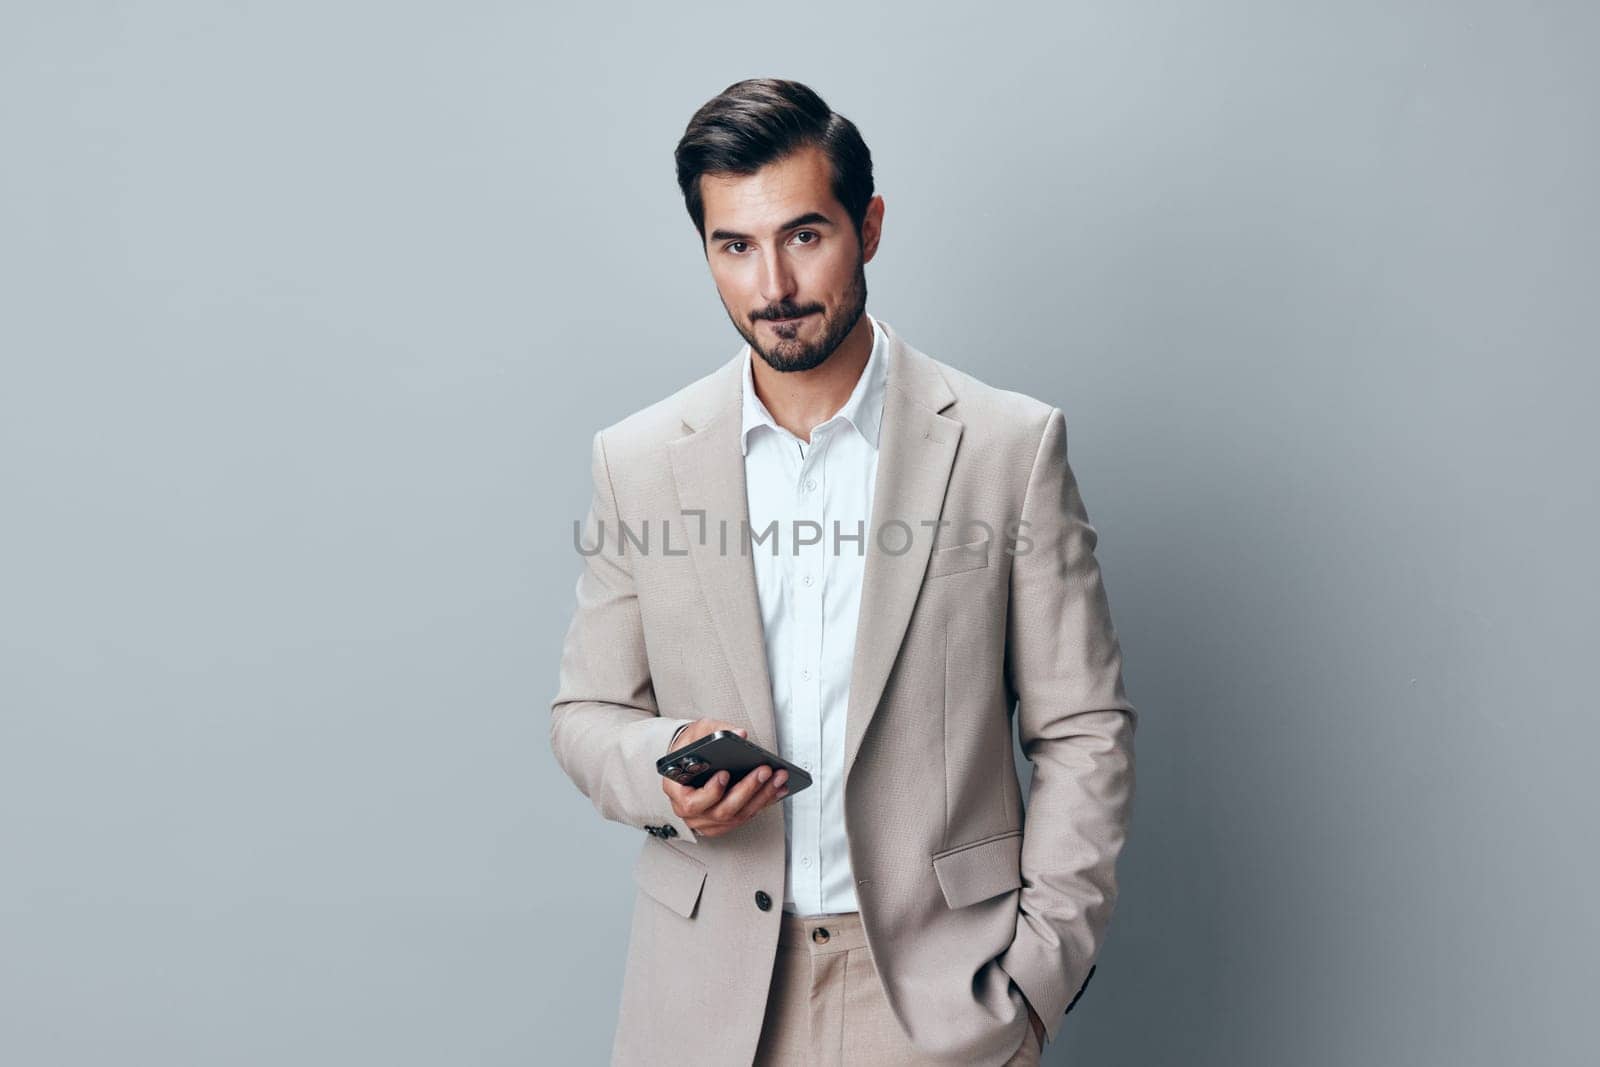 man beard studio portrait male entrepreneur success smartphone suit call white business handsome gray smile phone happy corporate internet hold lifestyle